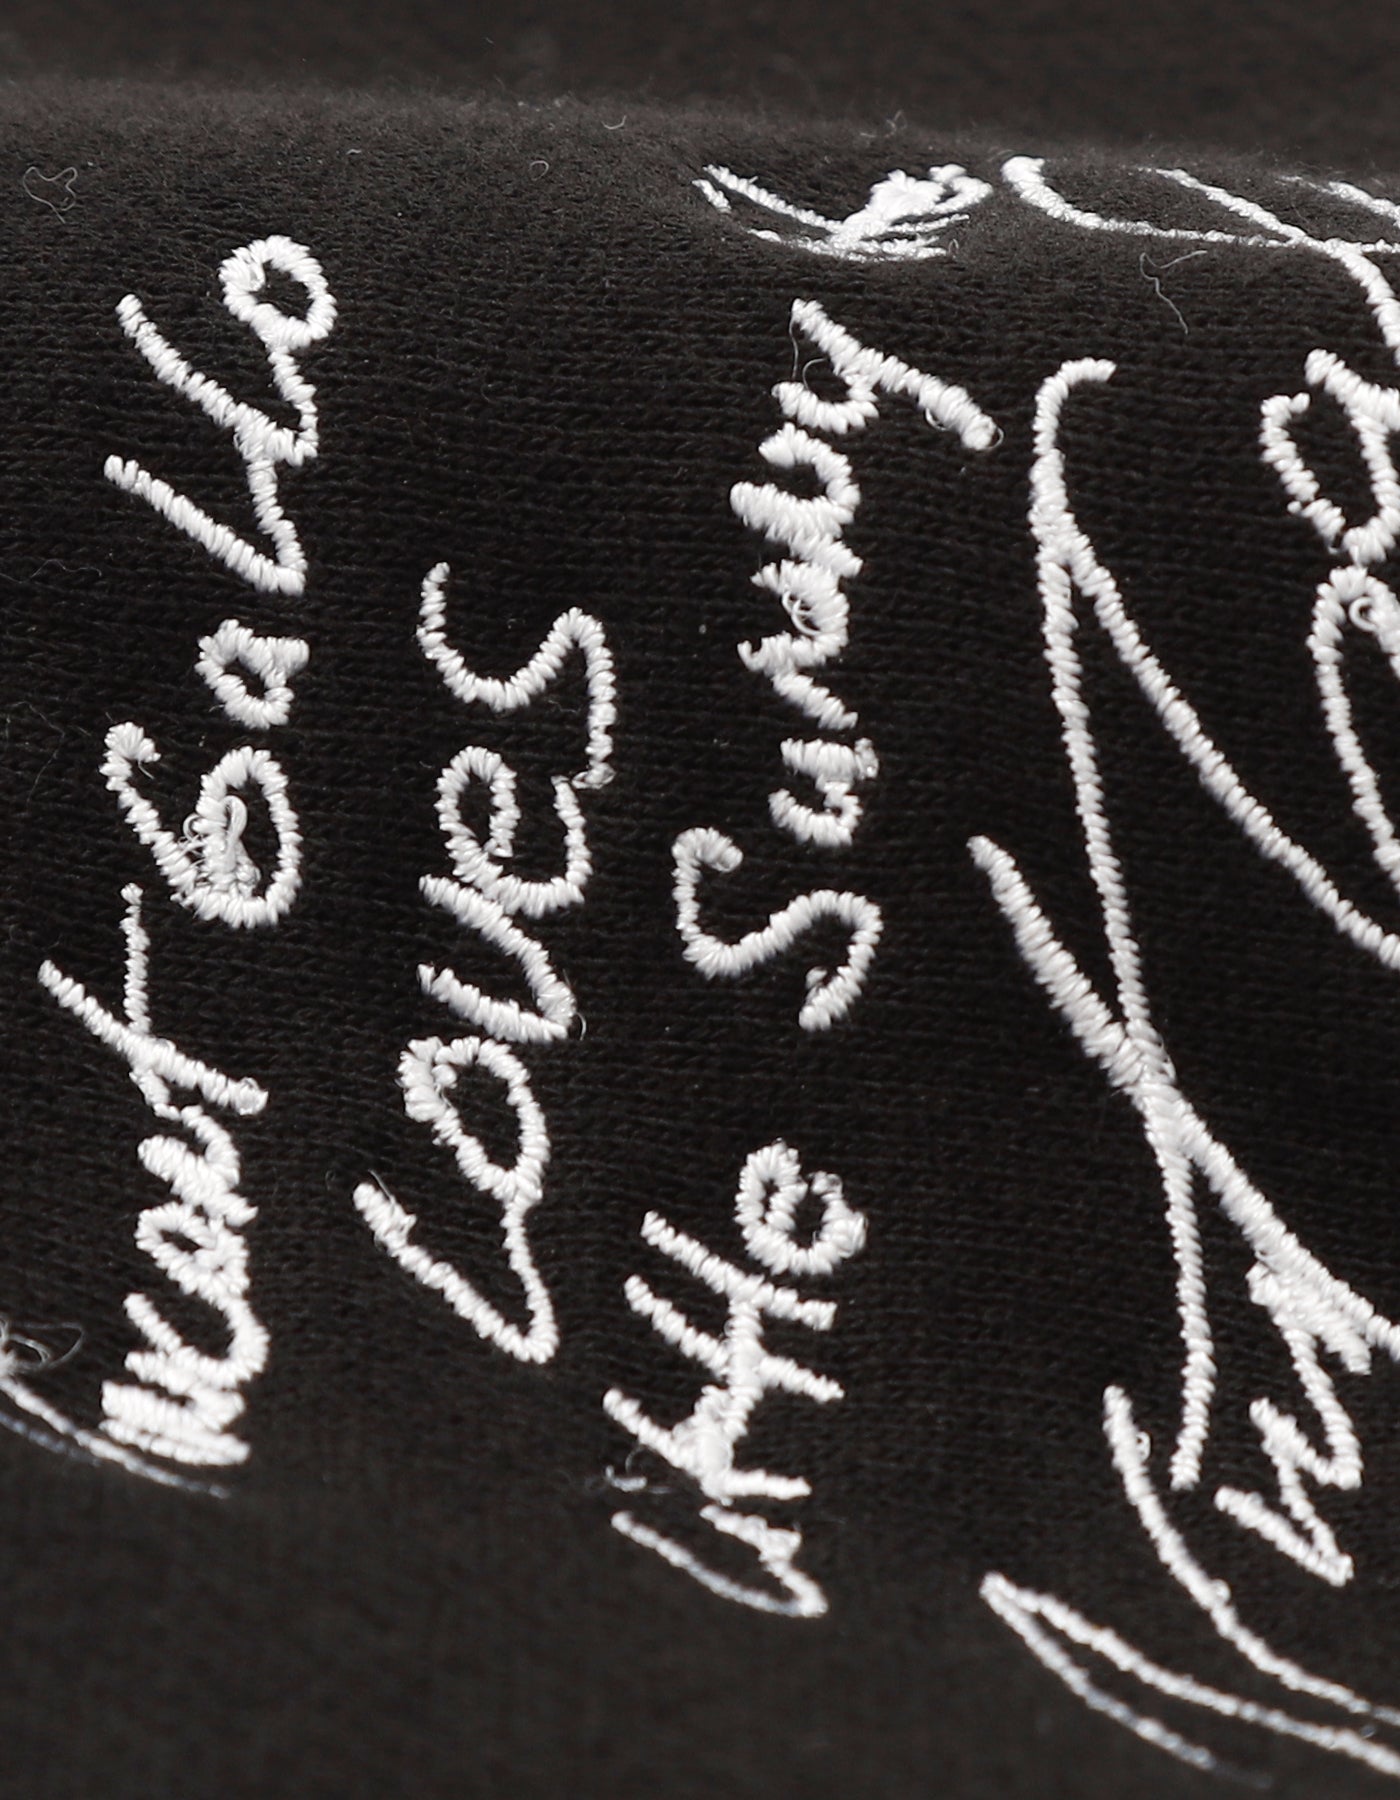 Vincent Gallo x little sunny bite photo hoodie / BLACK